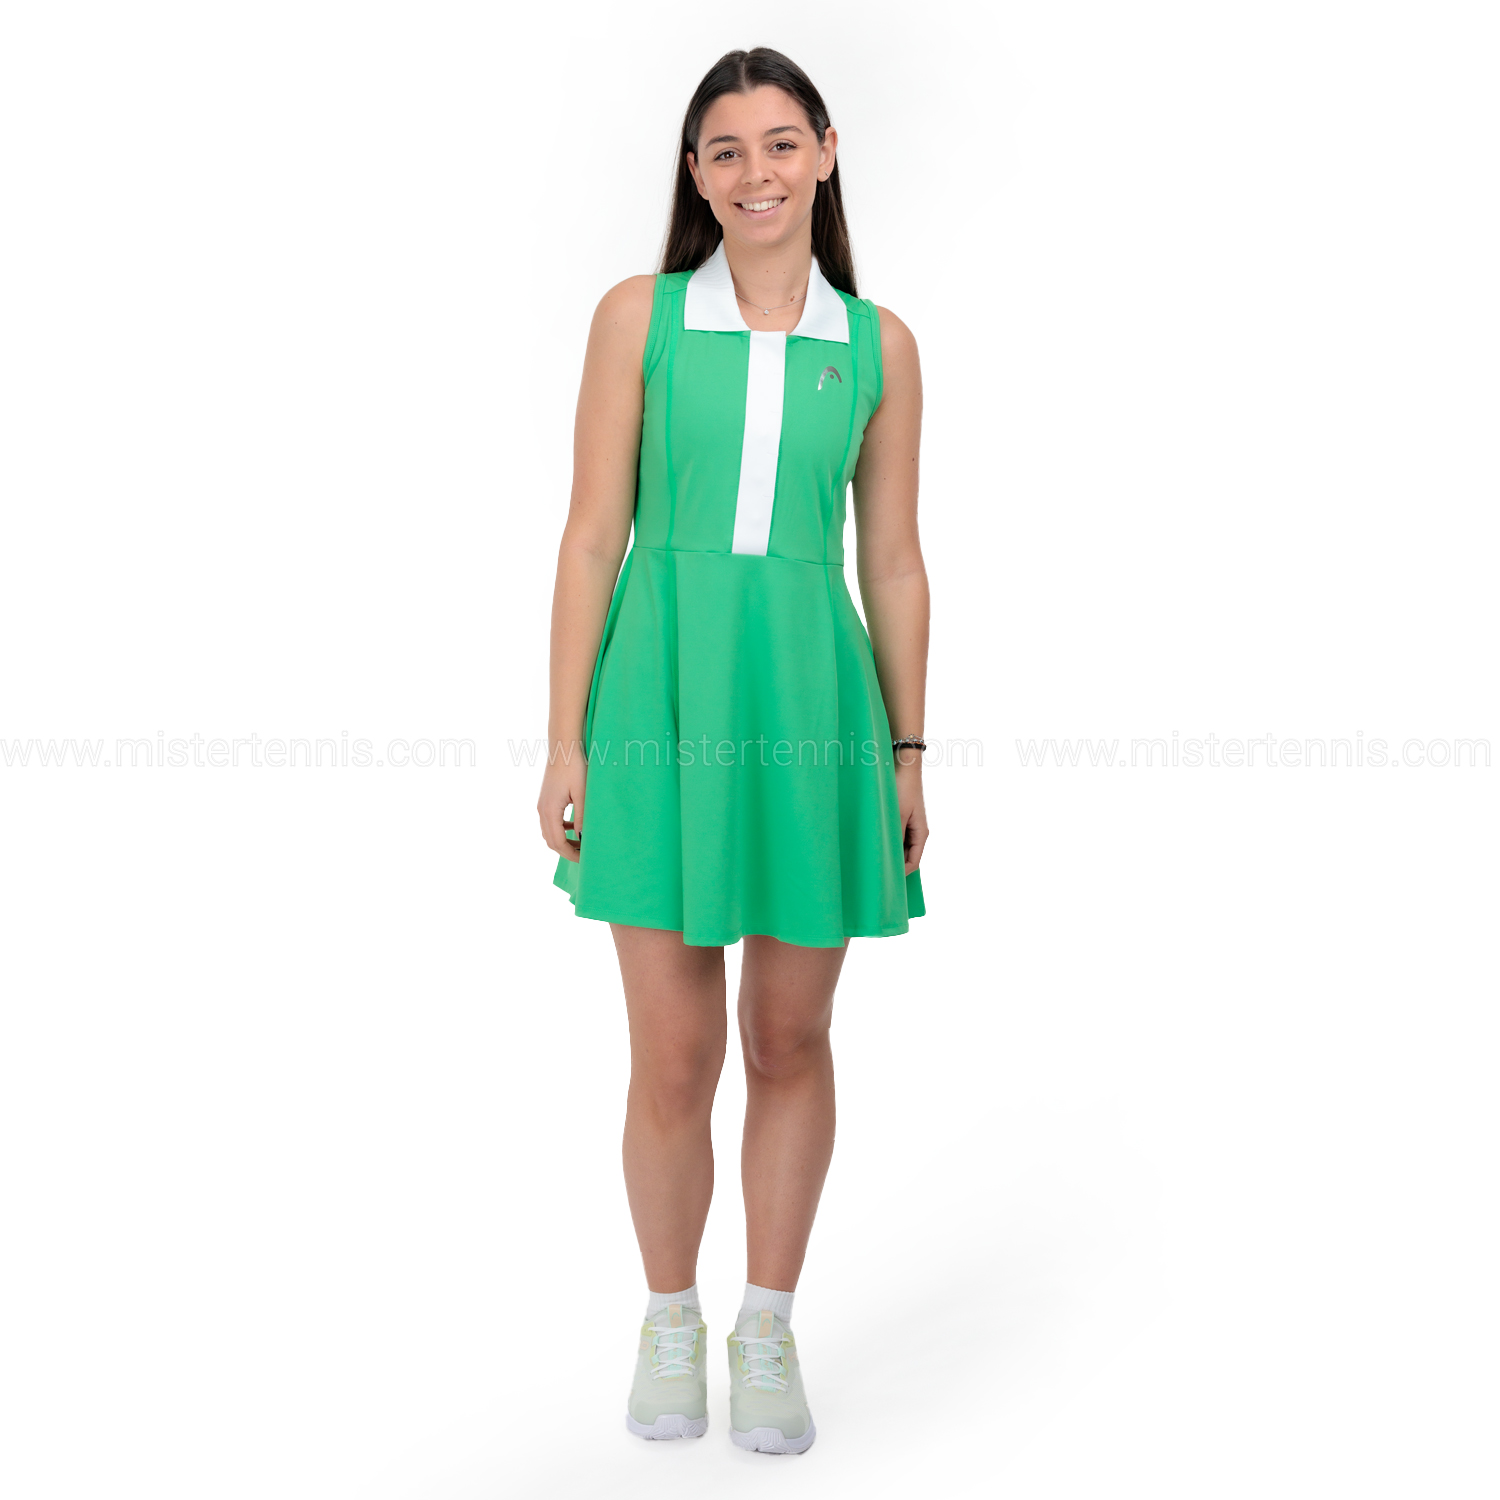 Head Performance Dress - Candy Green